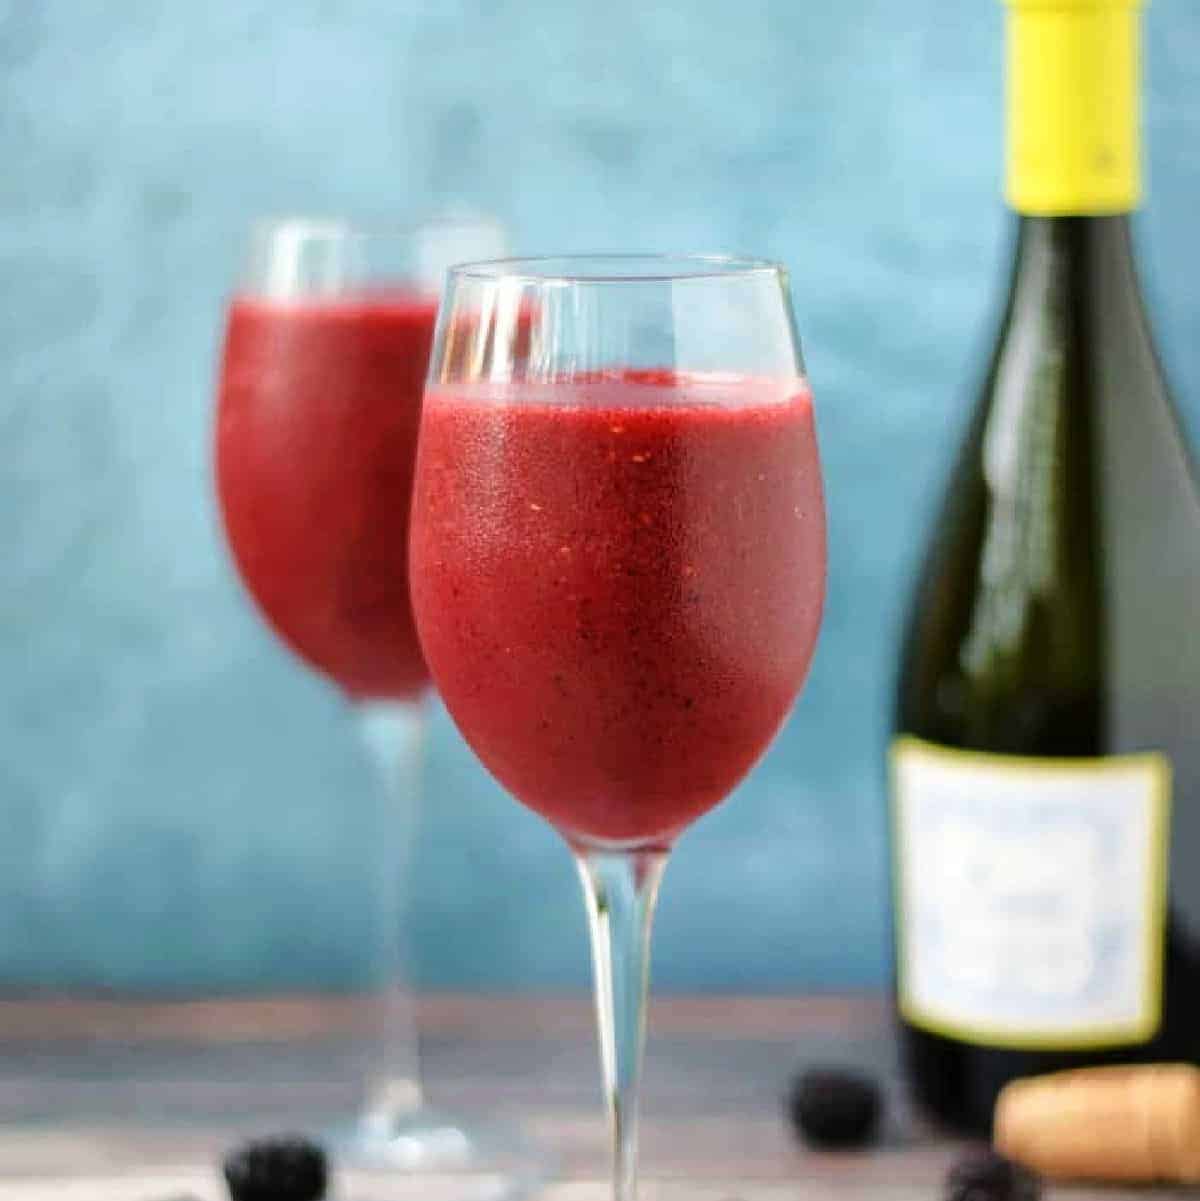 Dark berry wine smoothie in a wine glass.